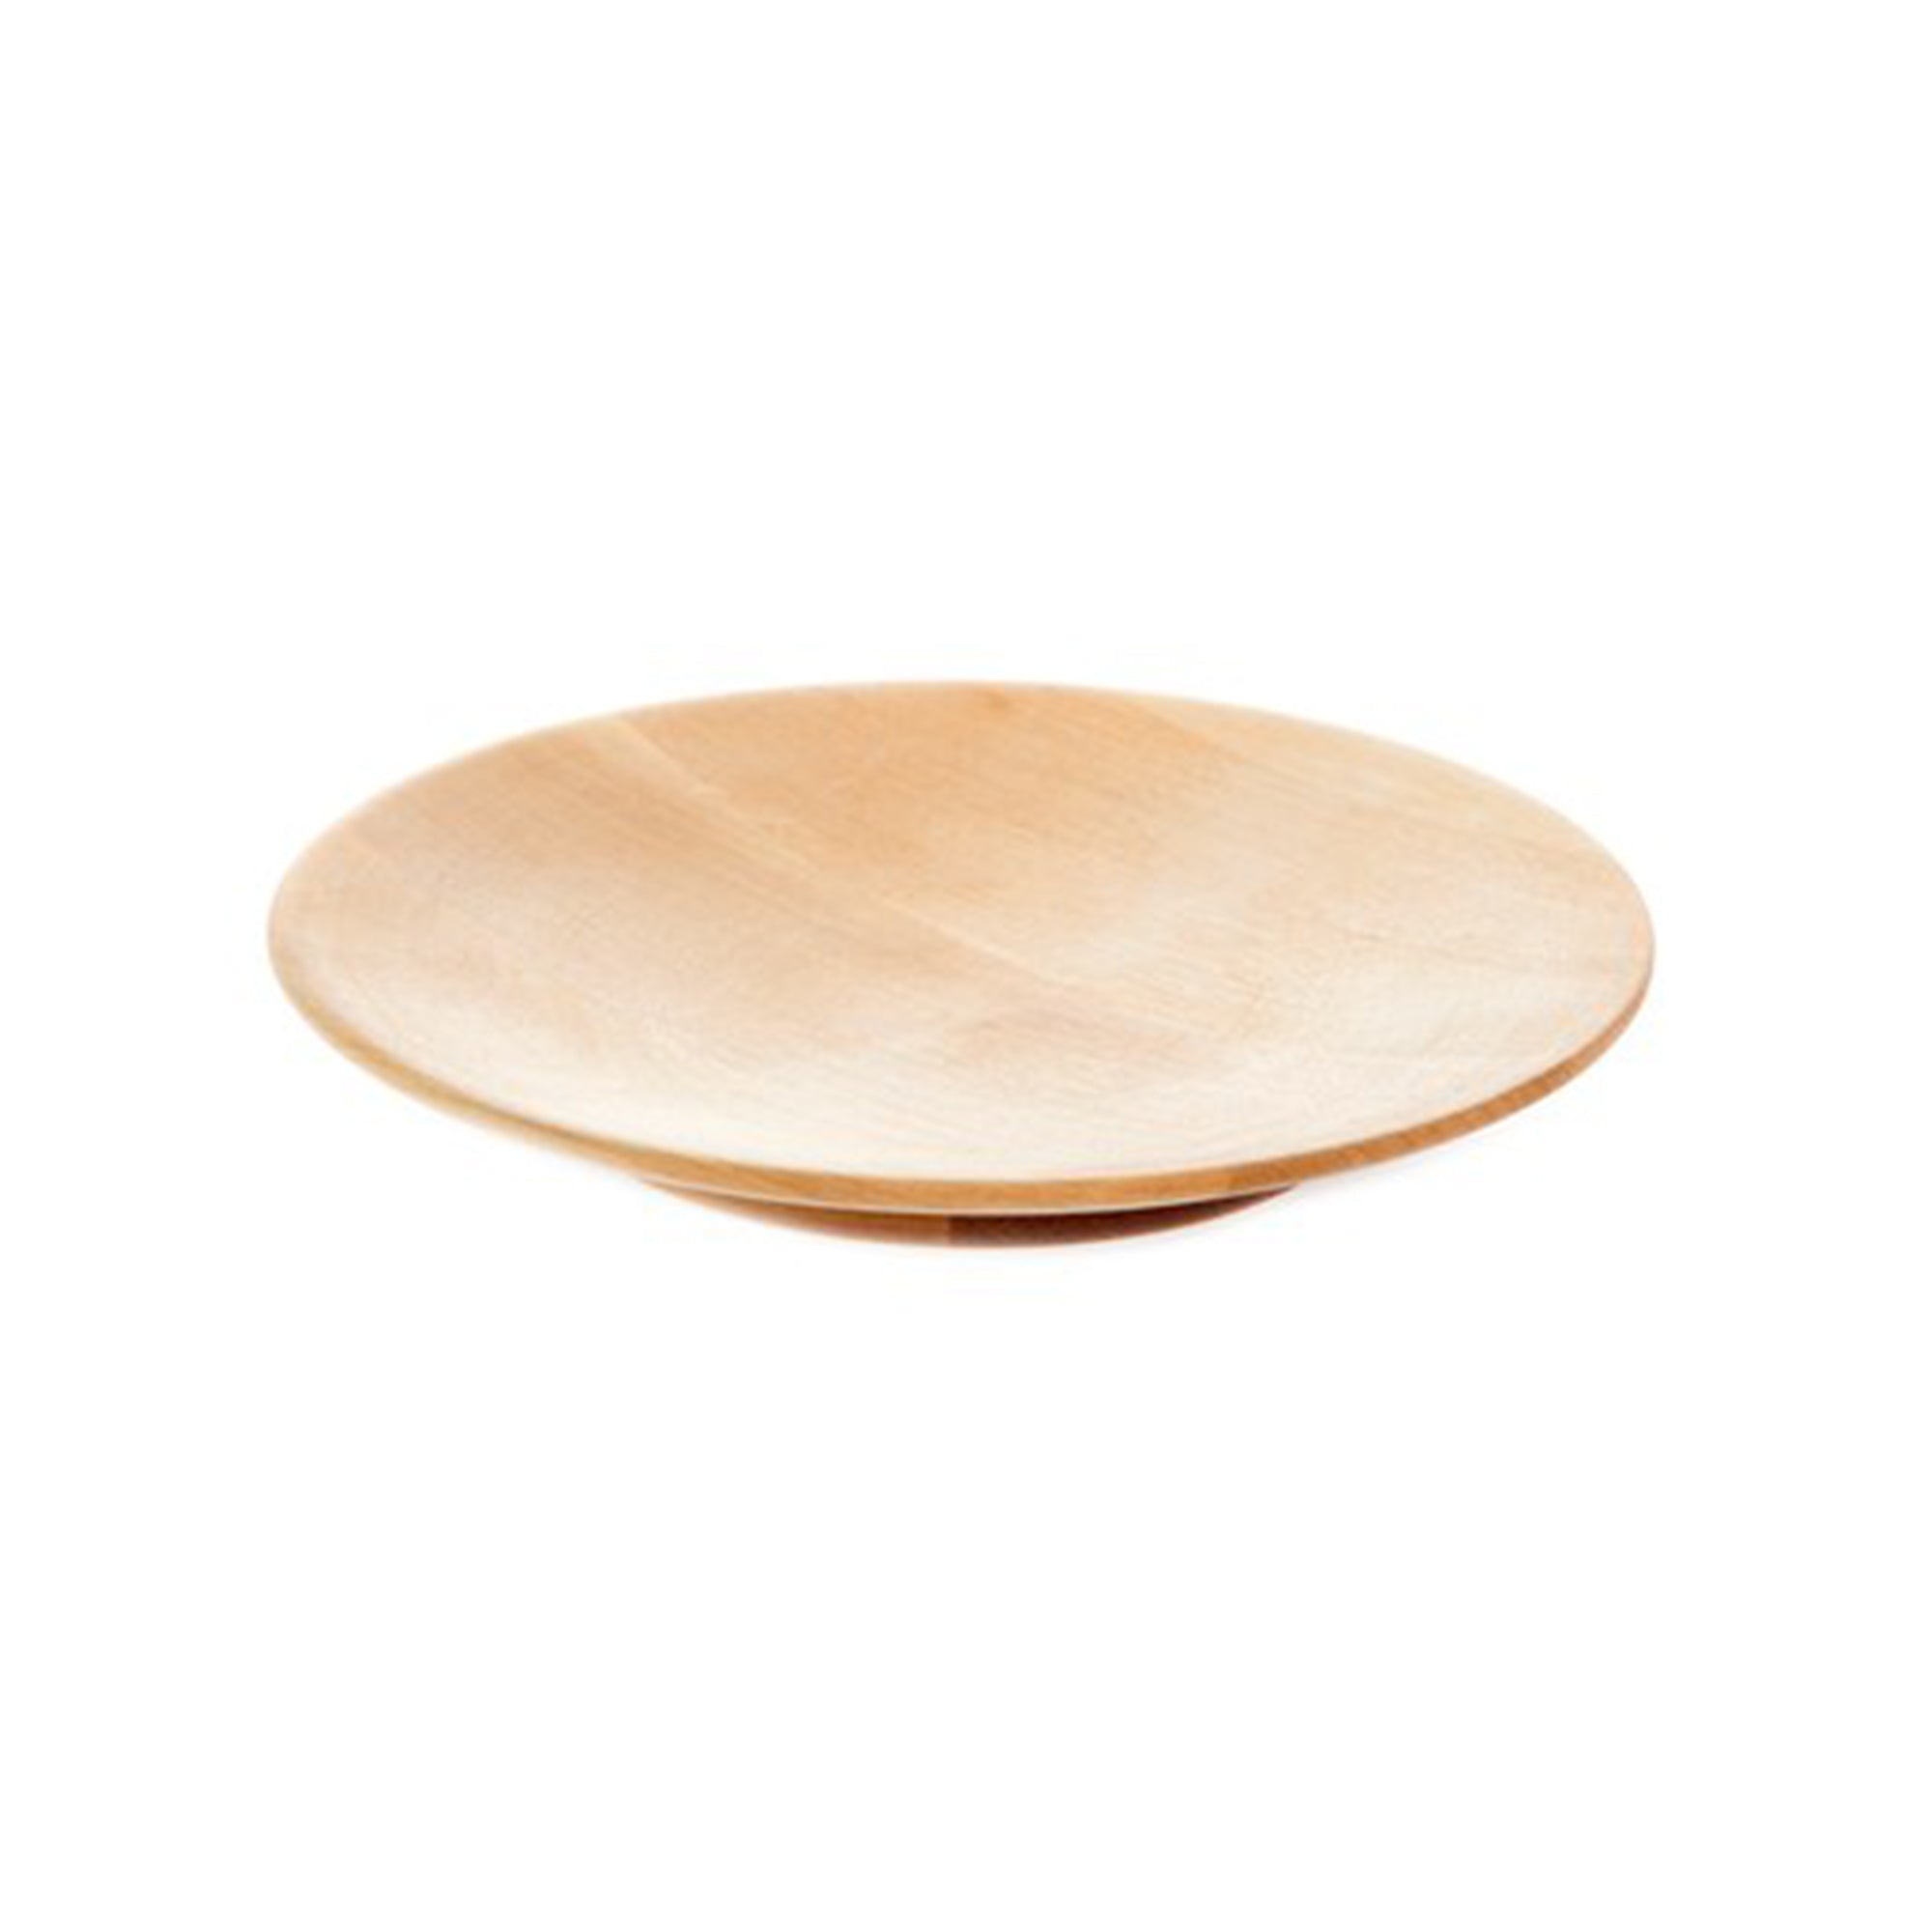 Wooden Birch Plate, Medium